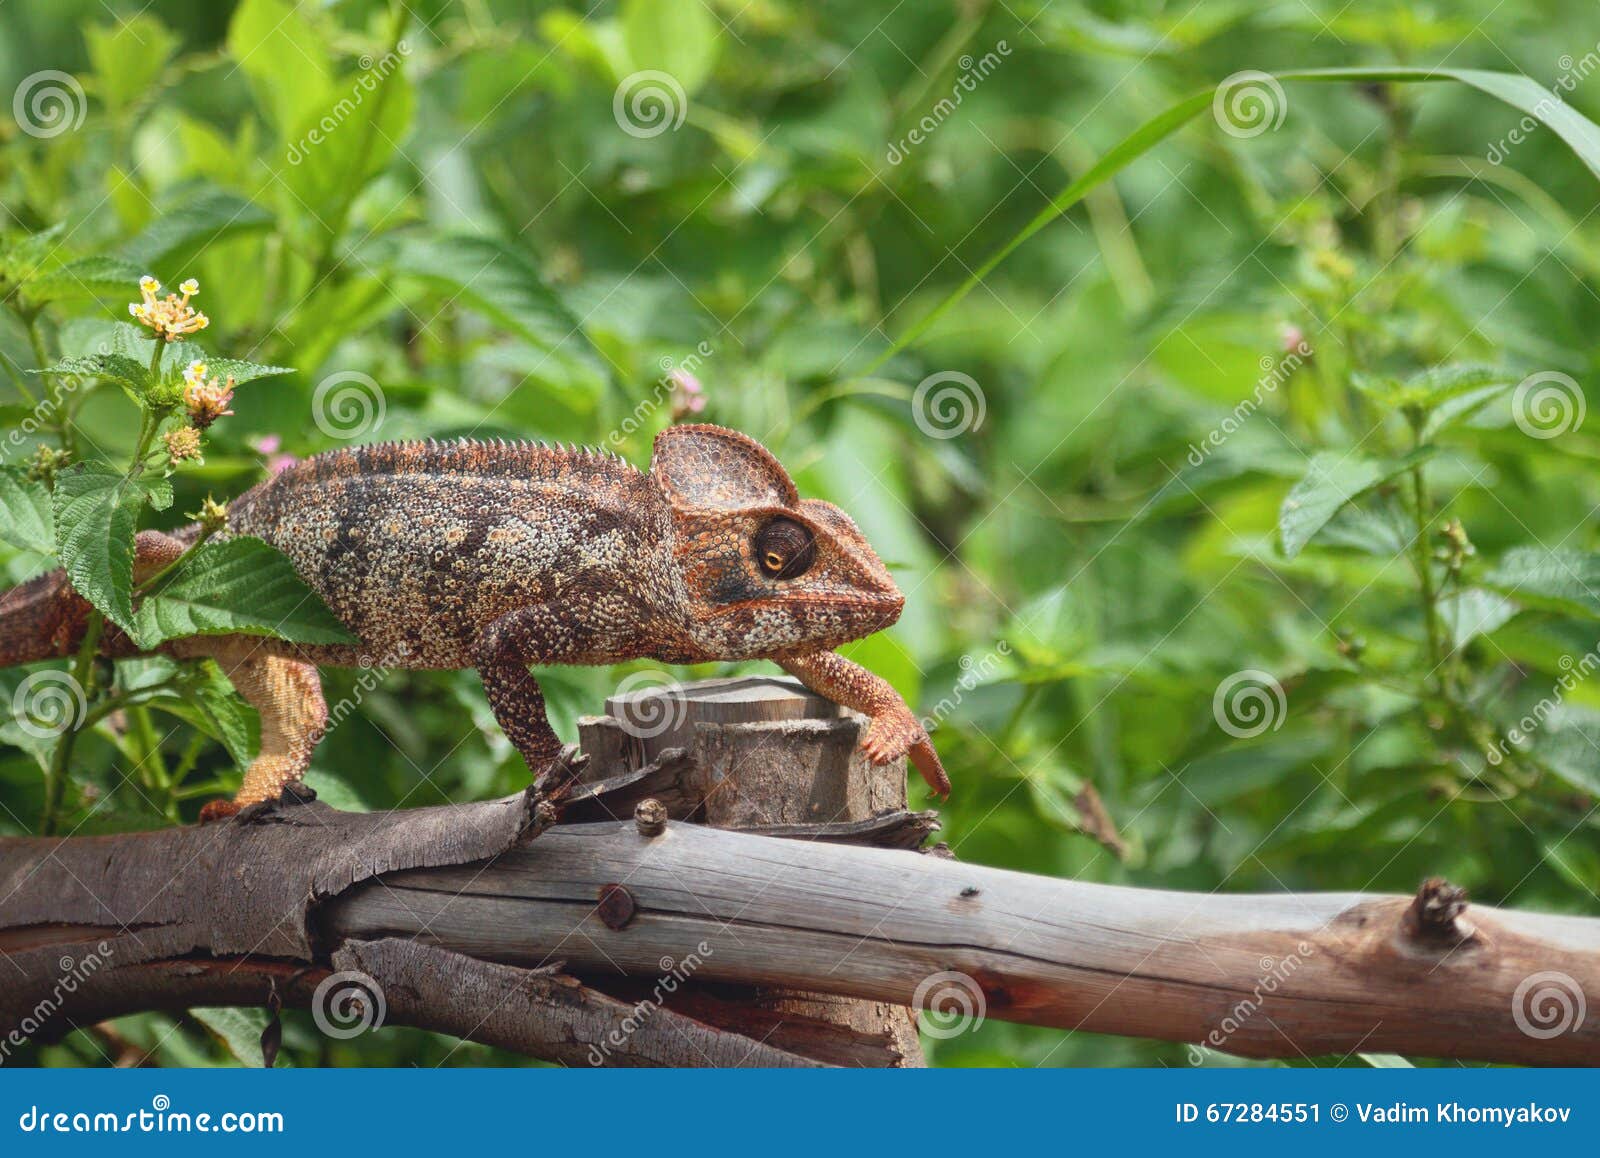 Chameleon Walking On Protection Stock Image - Image of ...